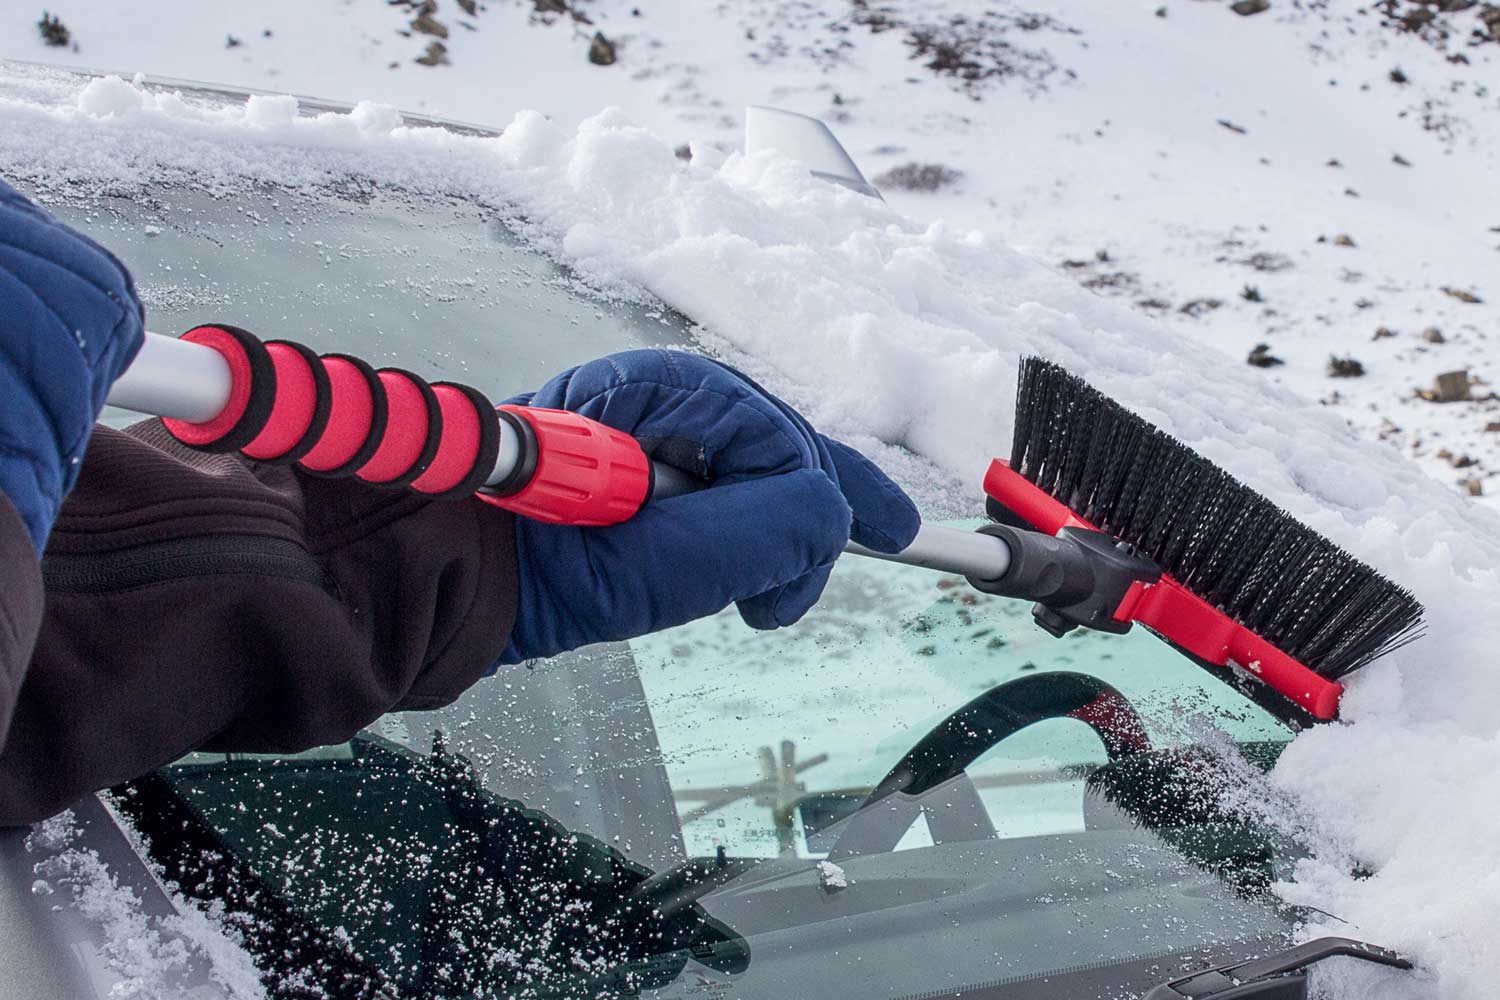 Mallory S30-886PKUS Snow Brush & Ice Scraper with Foam Grip